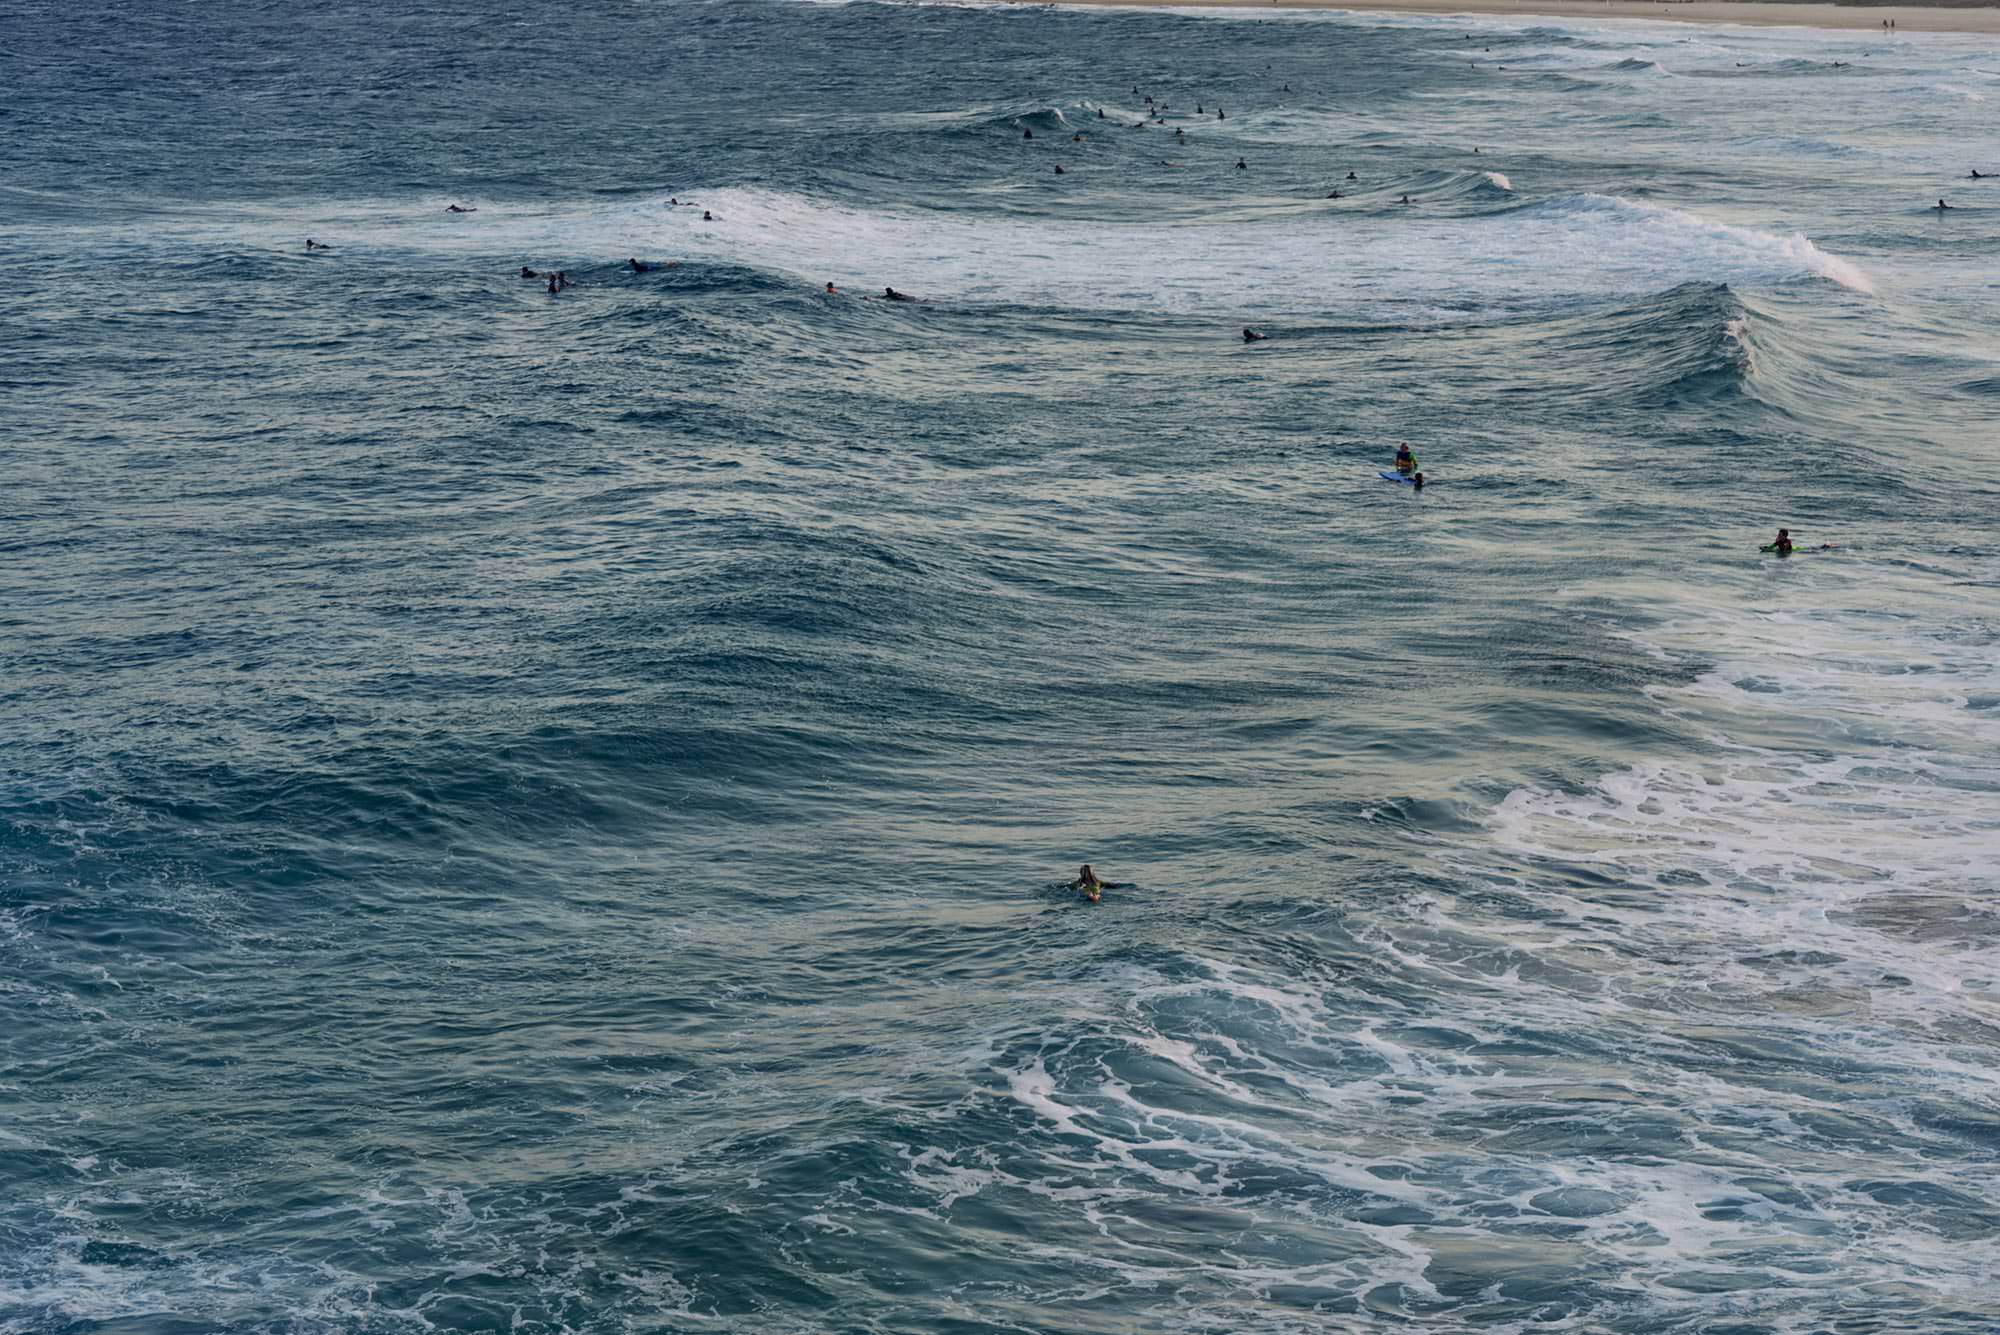 Surfers at Maroubra Beach